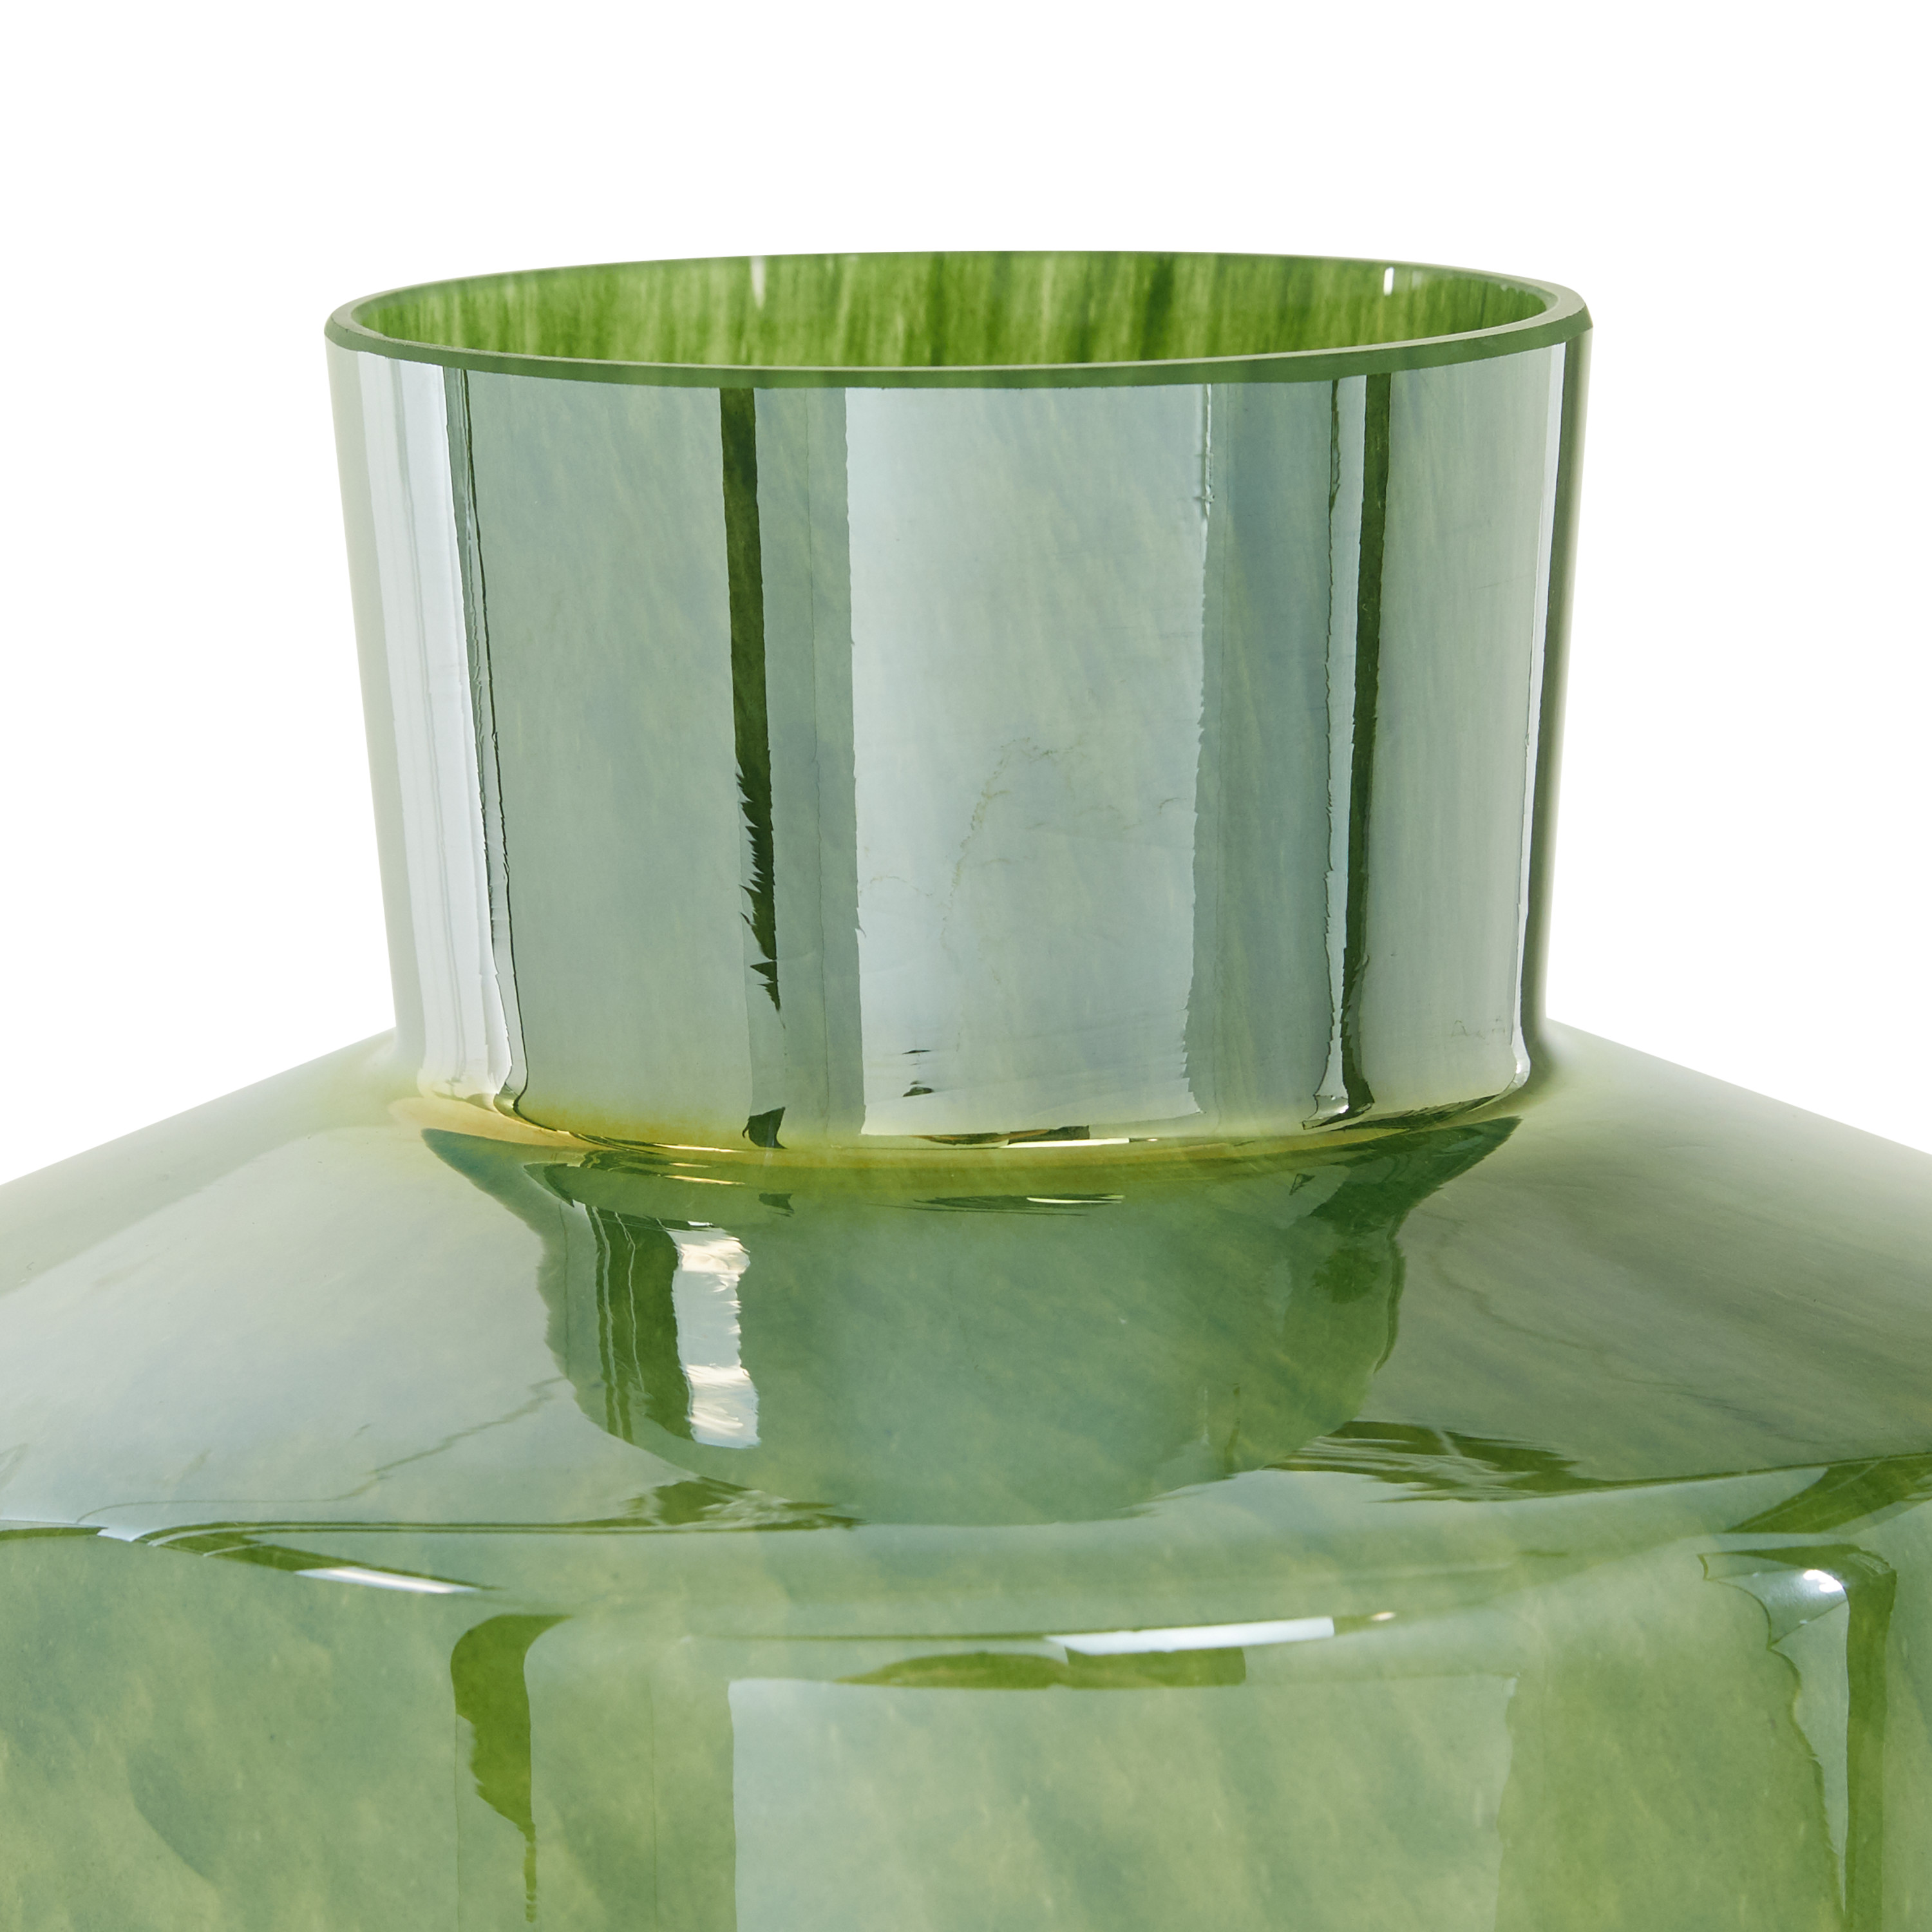 The Novogratz 13" Green Glass Vase - image 4 of 7